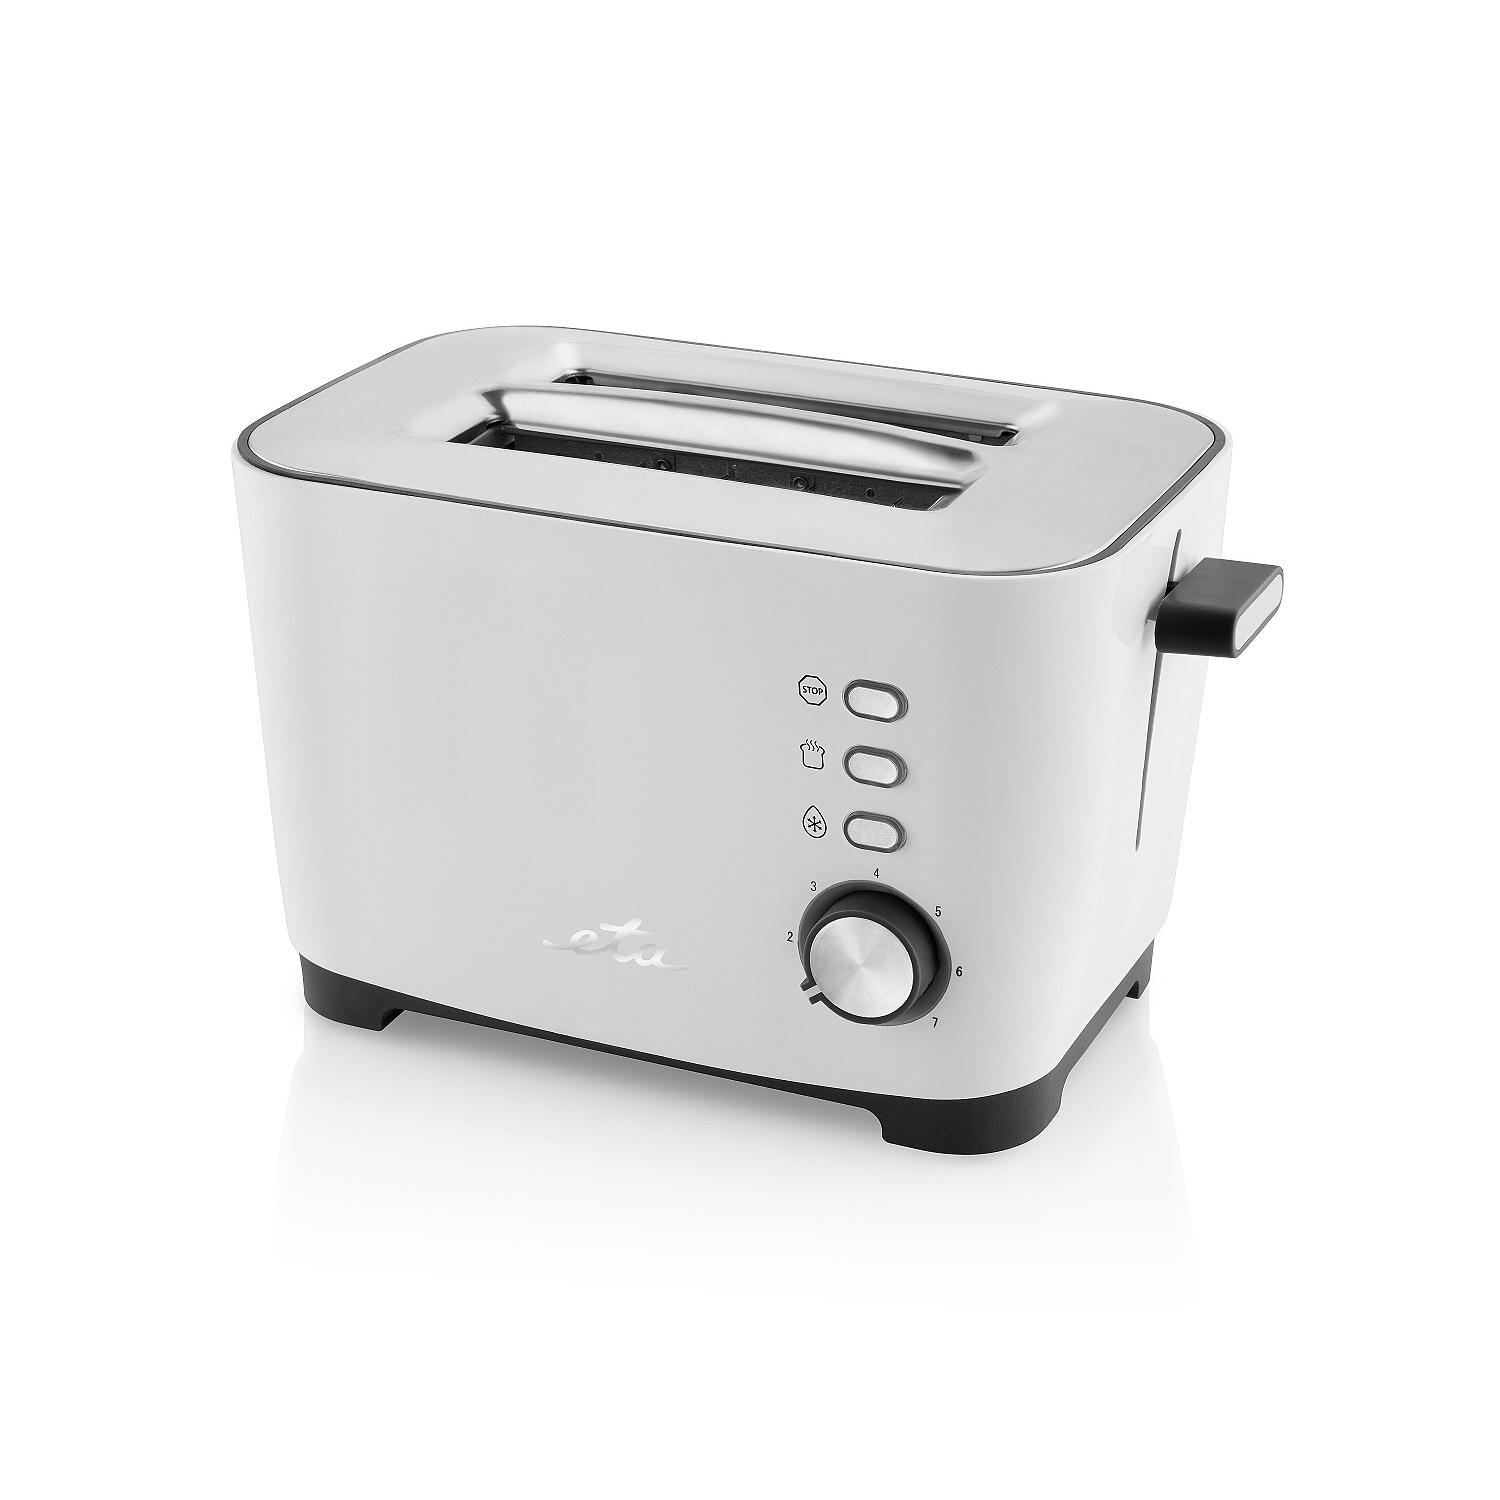 Ronny ETA (800 Schlitze: Weiß Watt, 2) Toaster